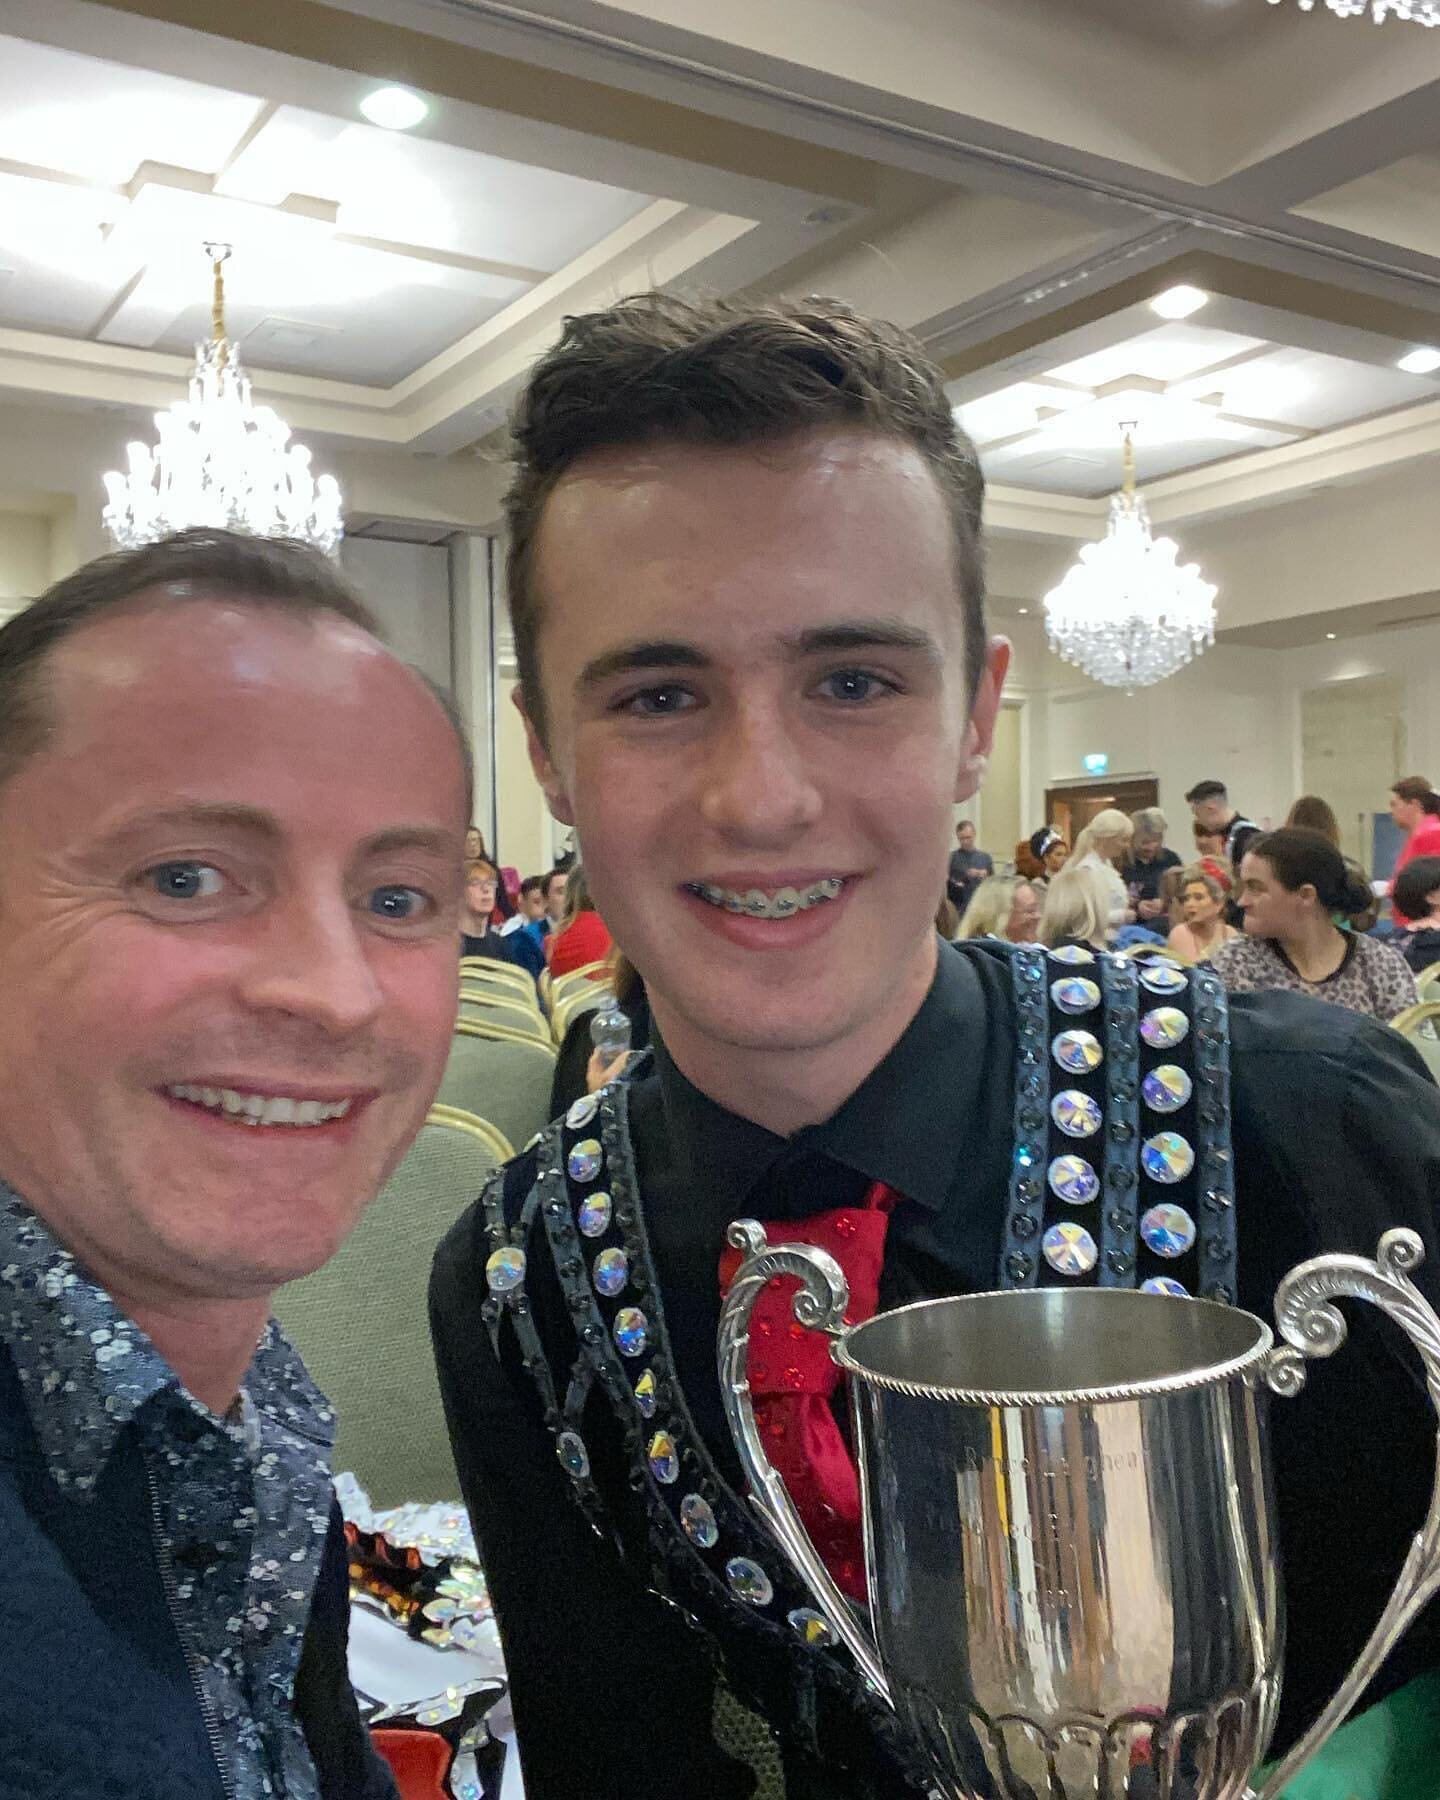 4 Times Leinster Champion!!!! Luke Mulvihill 🏆🌎 We are so beyond proud!! 👑

#omg #irish #dance #leinster #proud #omgirishdance #idmfeisfun